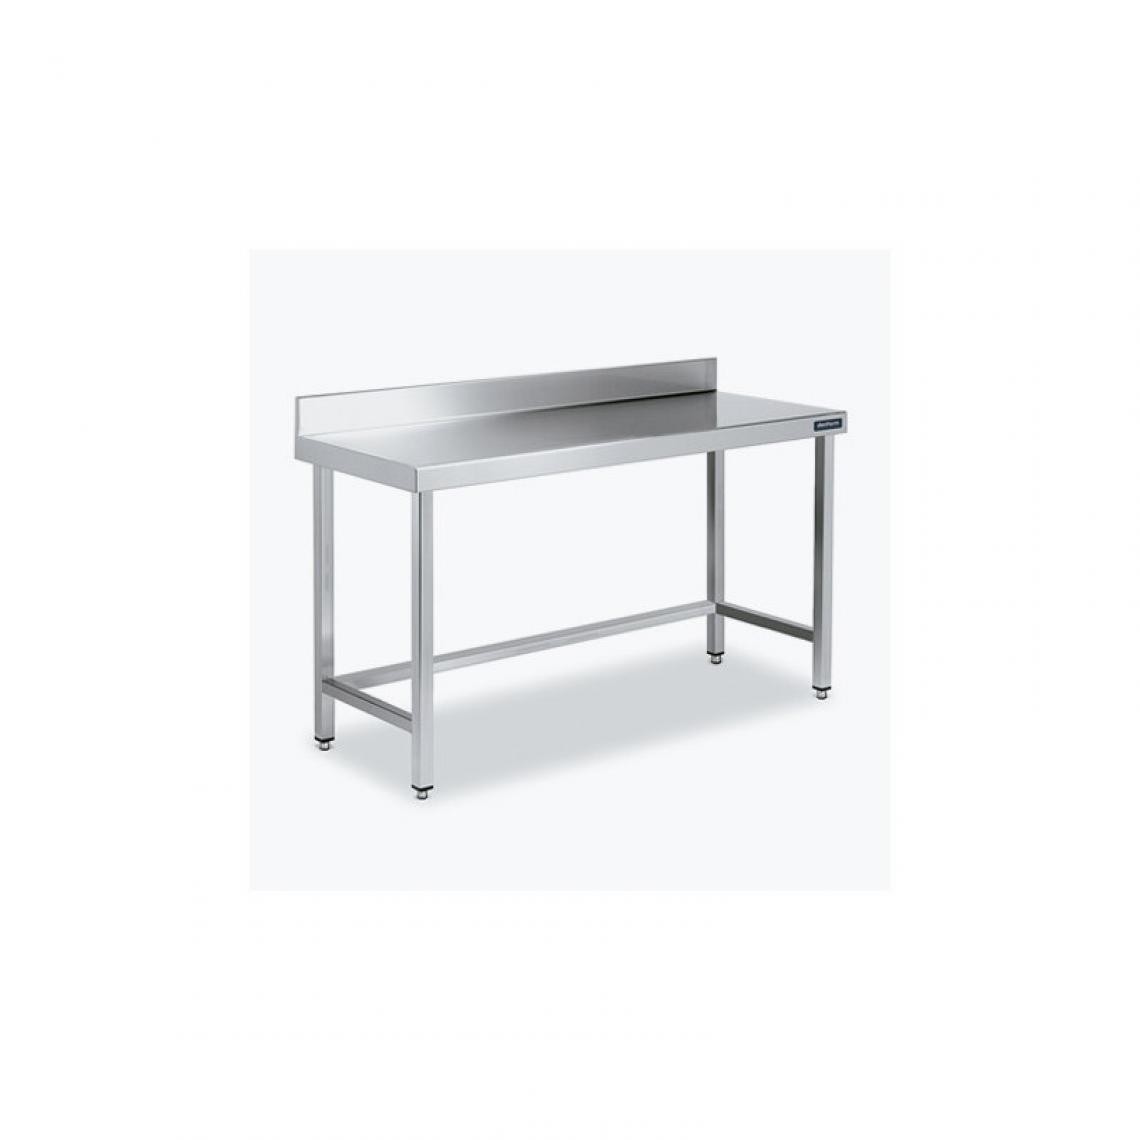 DISTFORM - Table Adossée 700x700 avec Renforts - Distform - Inox 18/101900x800x850mm - Tables à manger